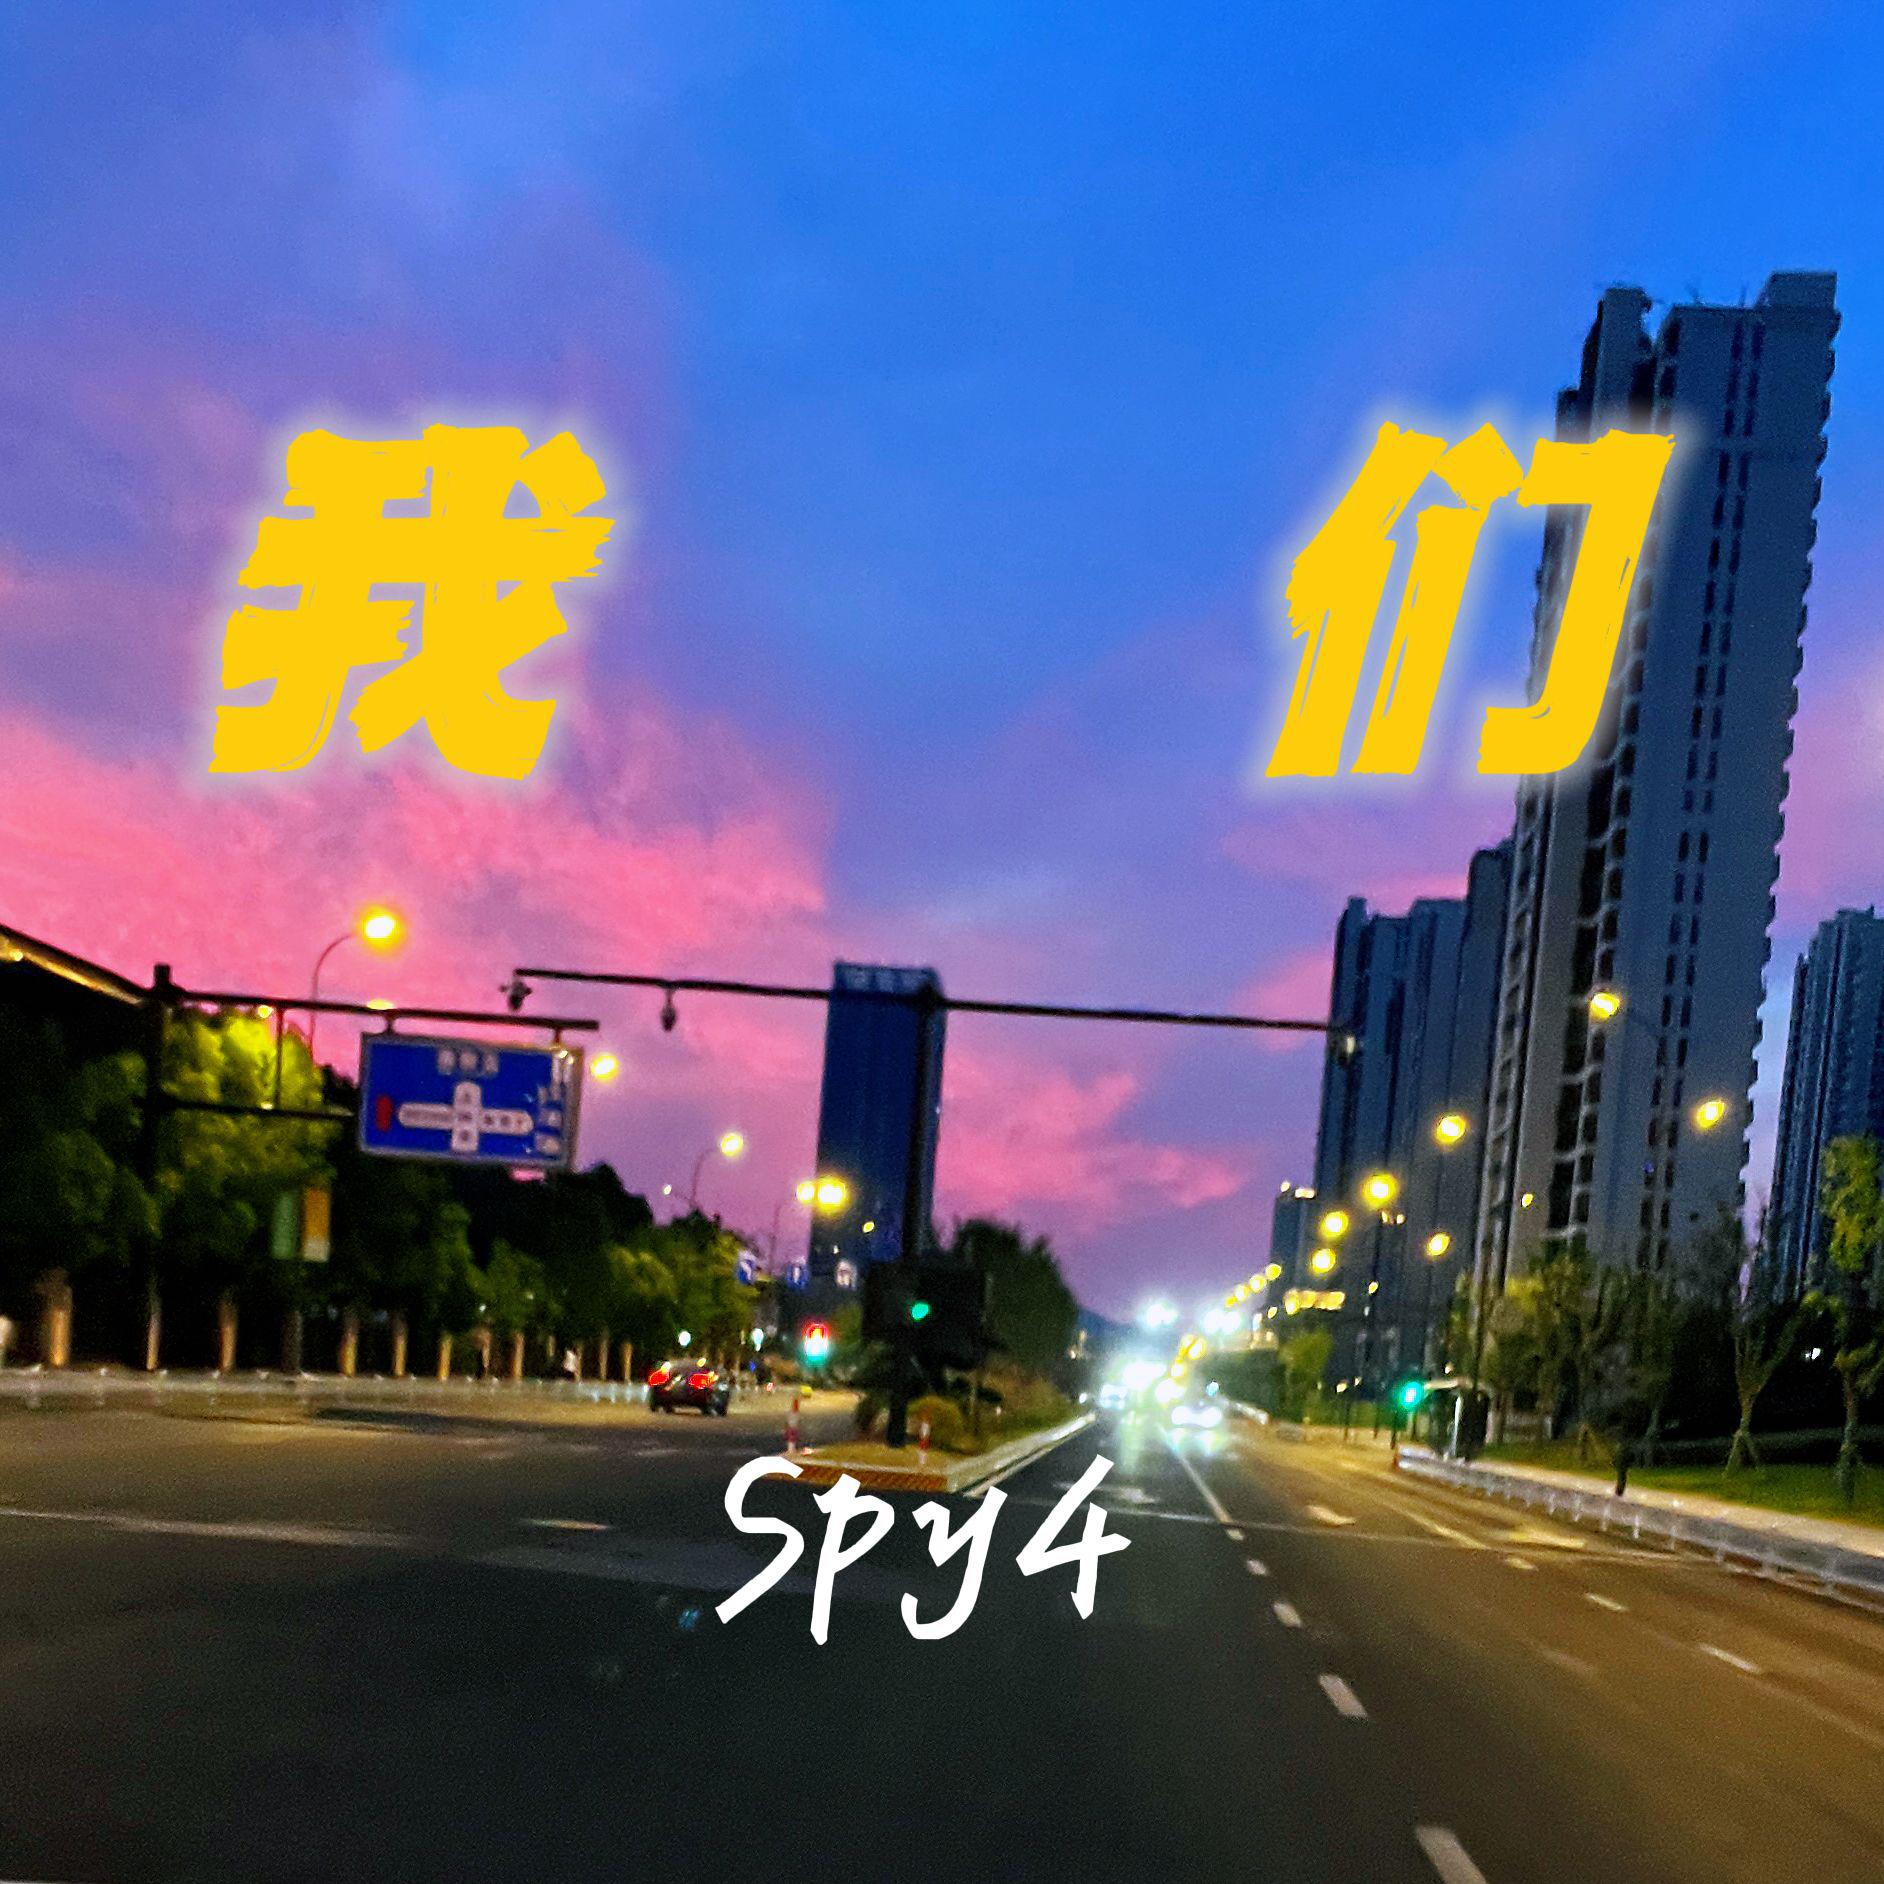 Spy4 - 我们